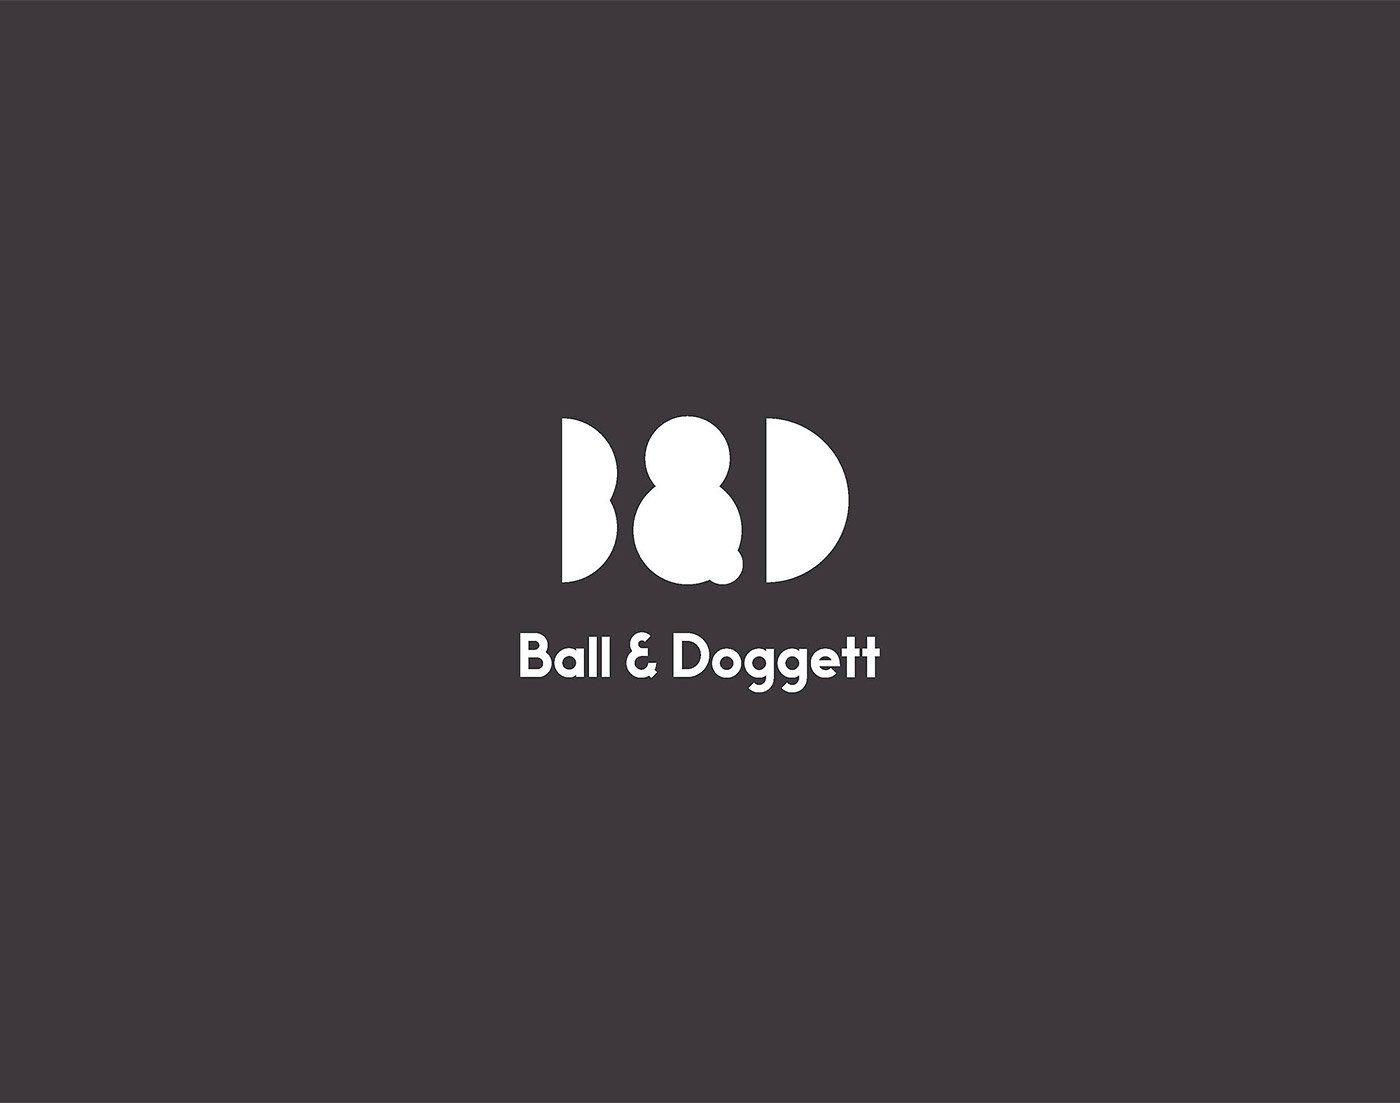 Doggett Logo - Ball & Doggett Branding by For The People. Logos / Branding